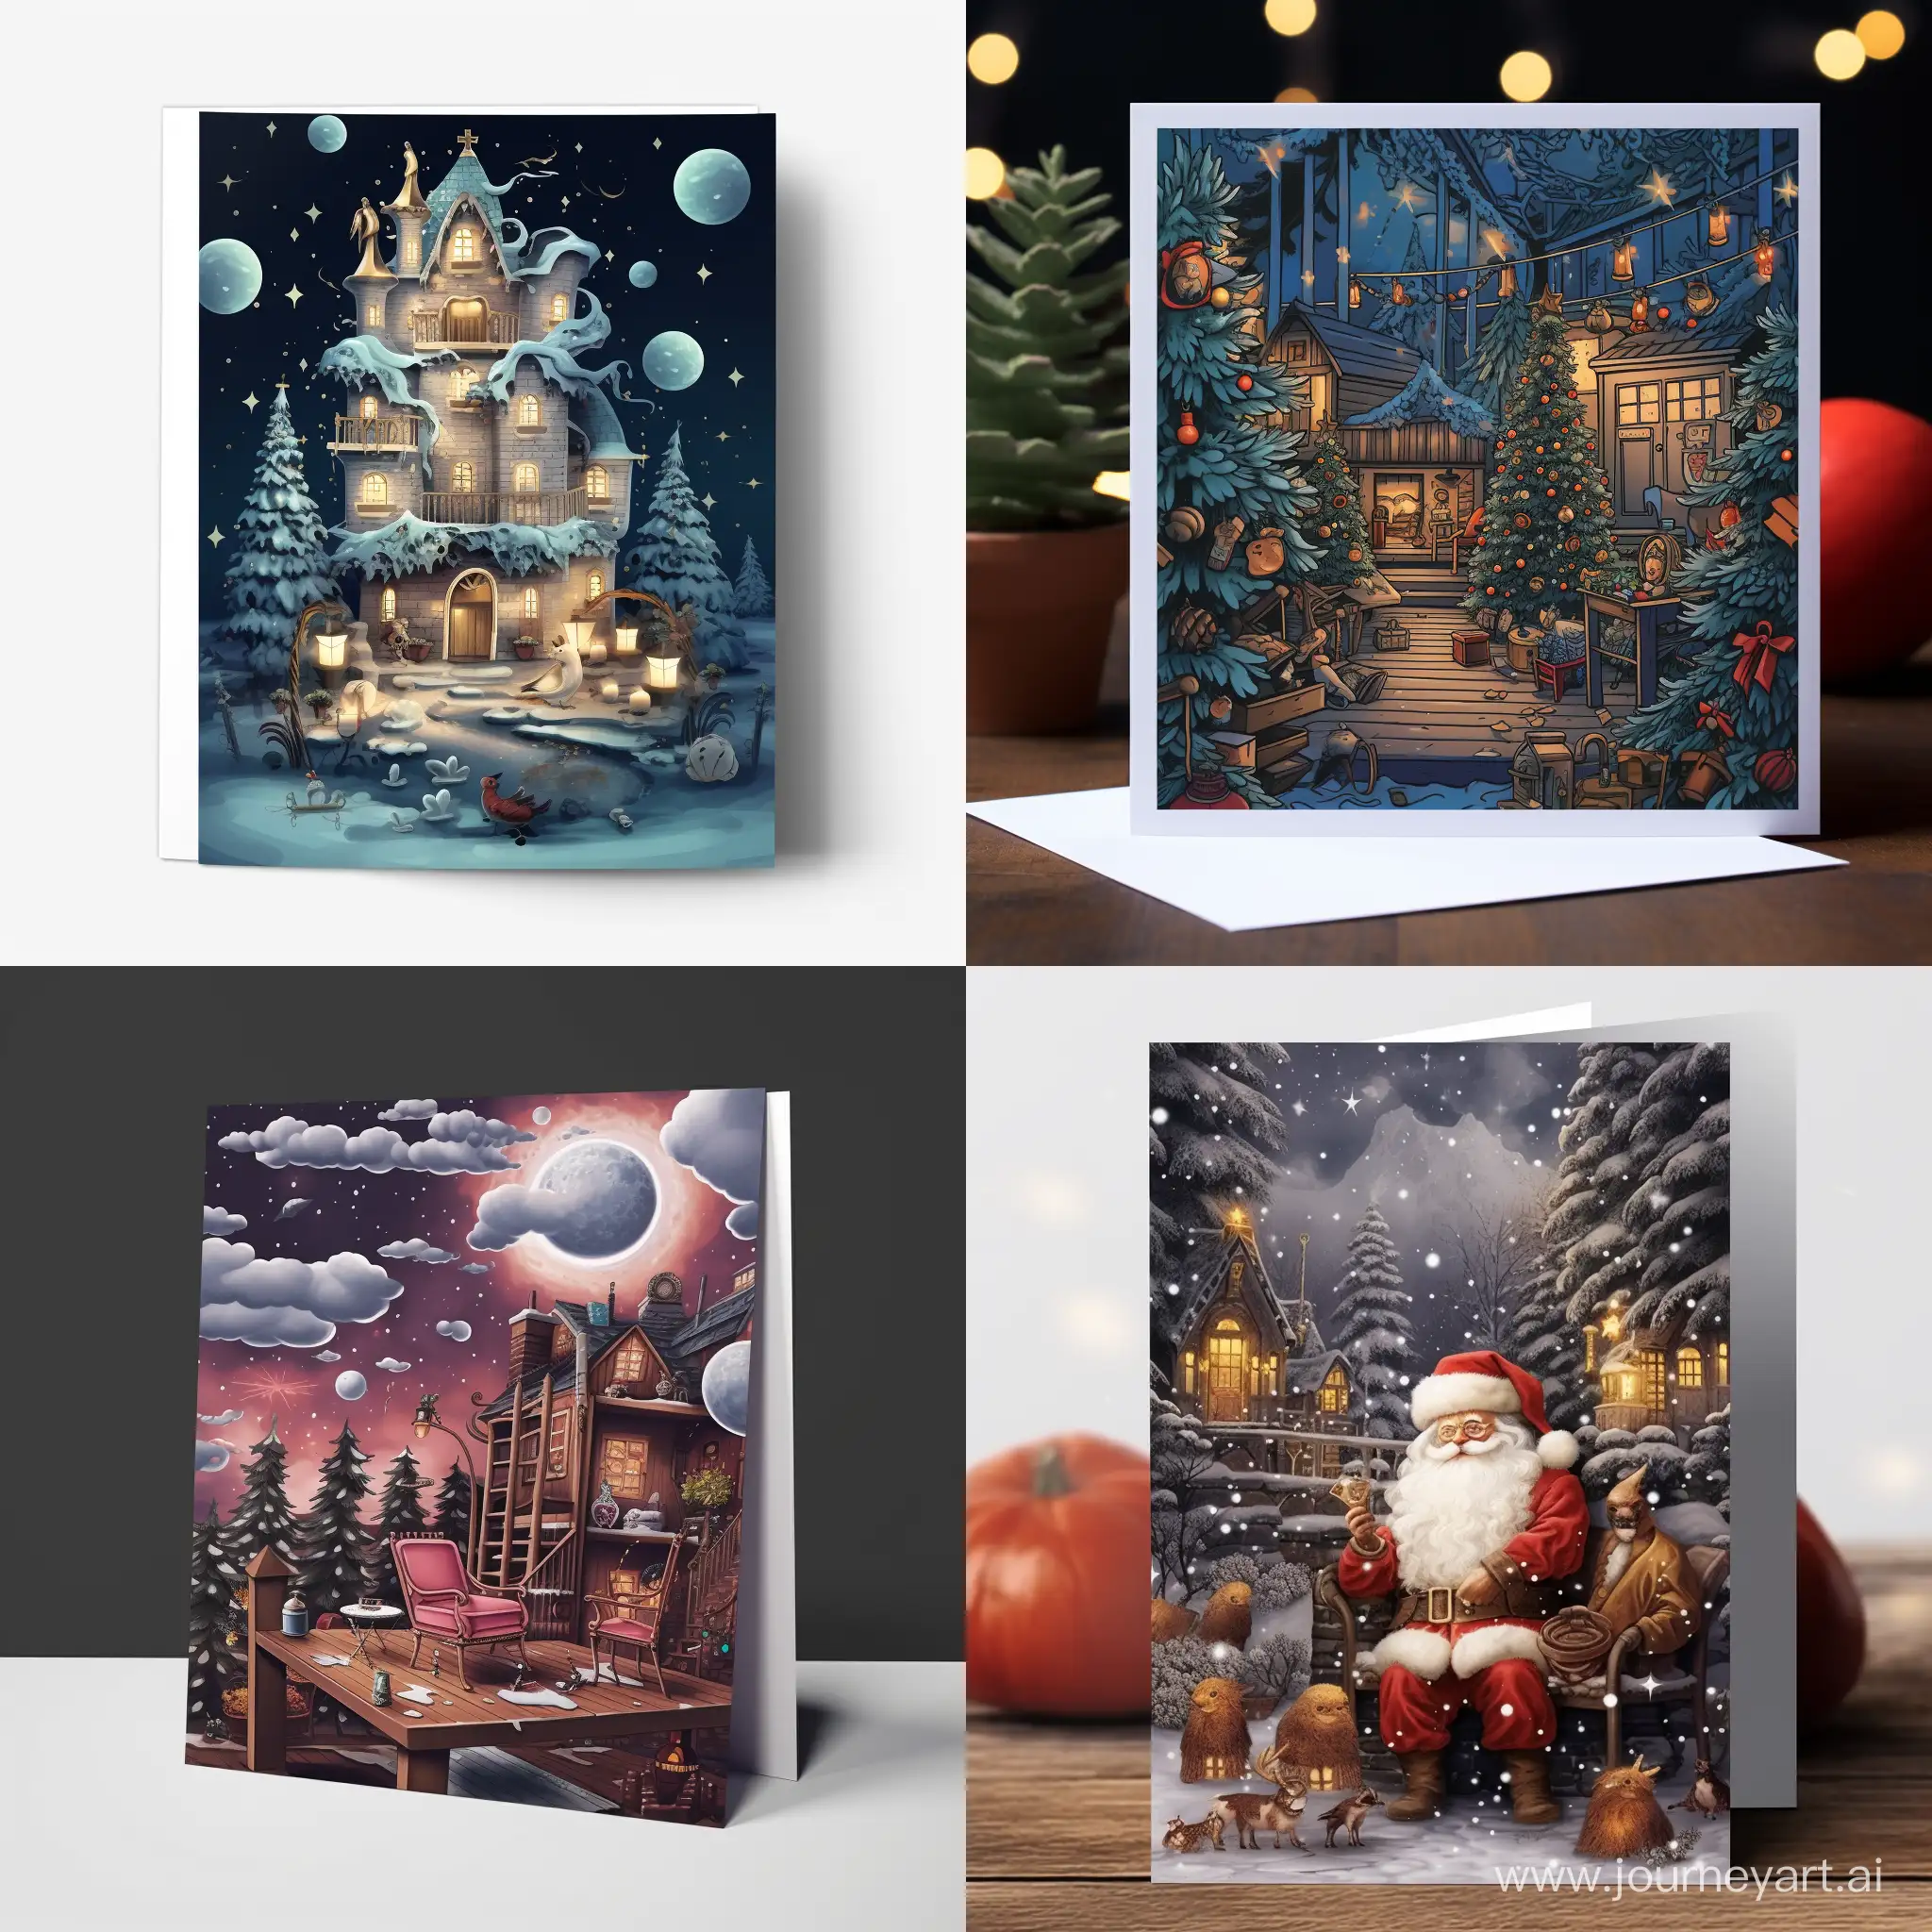 Joyful-Christmas-Greeting-Card-with-Festive-Ornaments